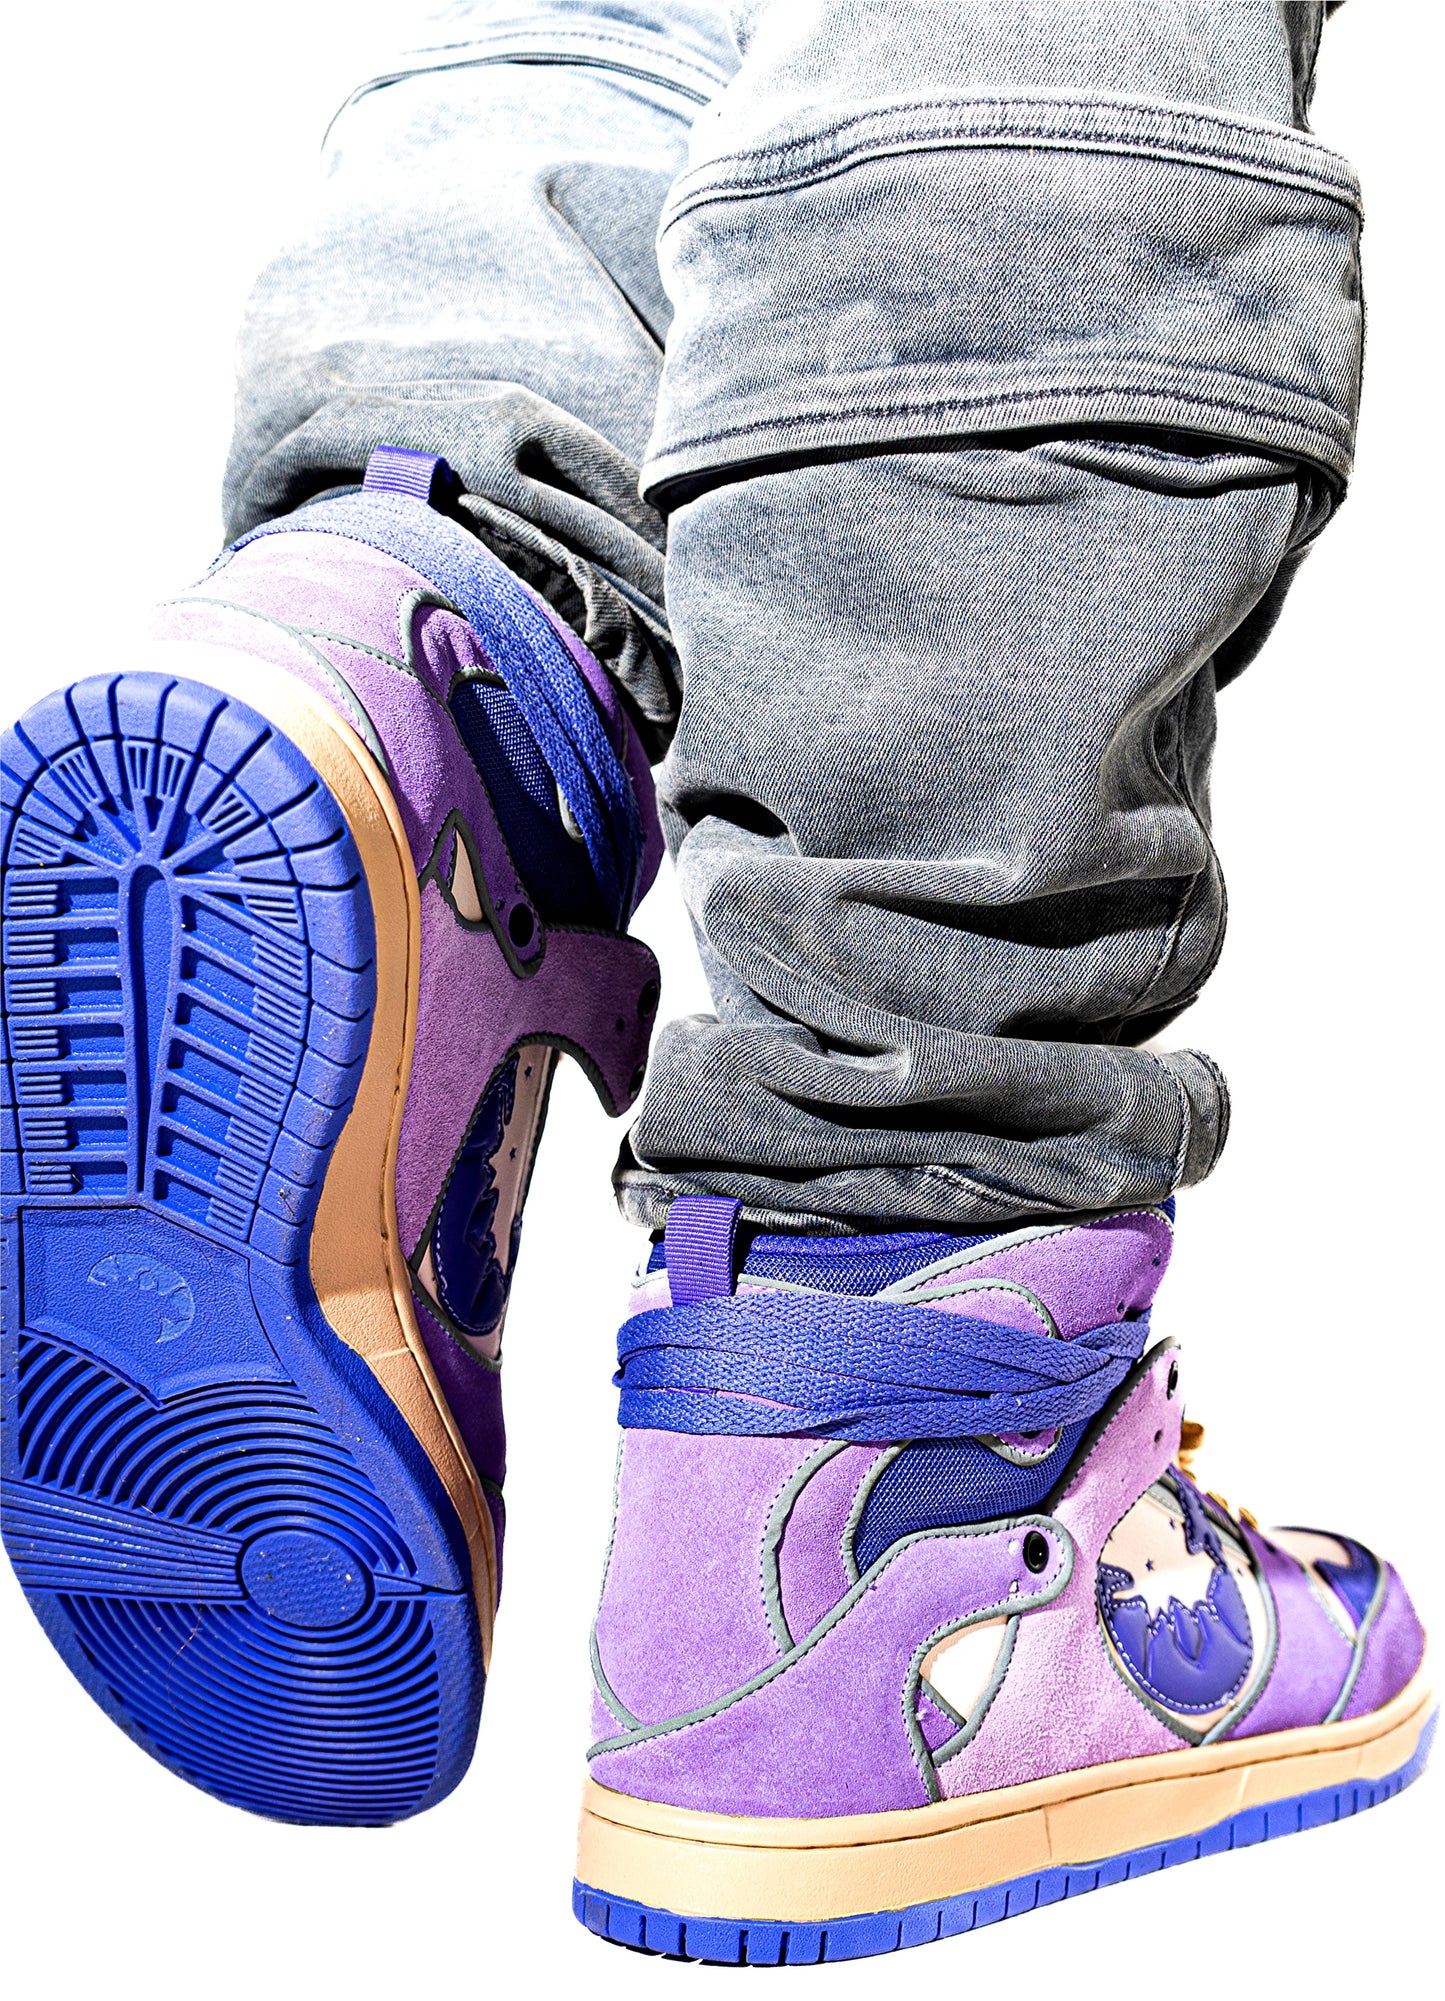 High Tide "Lavender" Sneakers (Pre-Order)